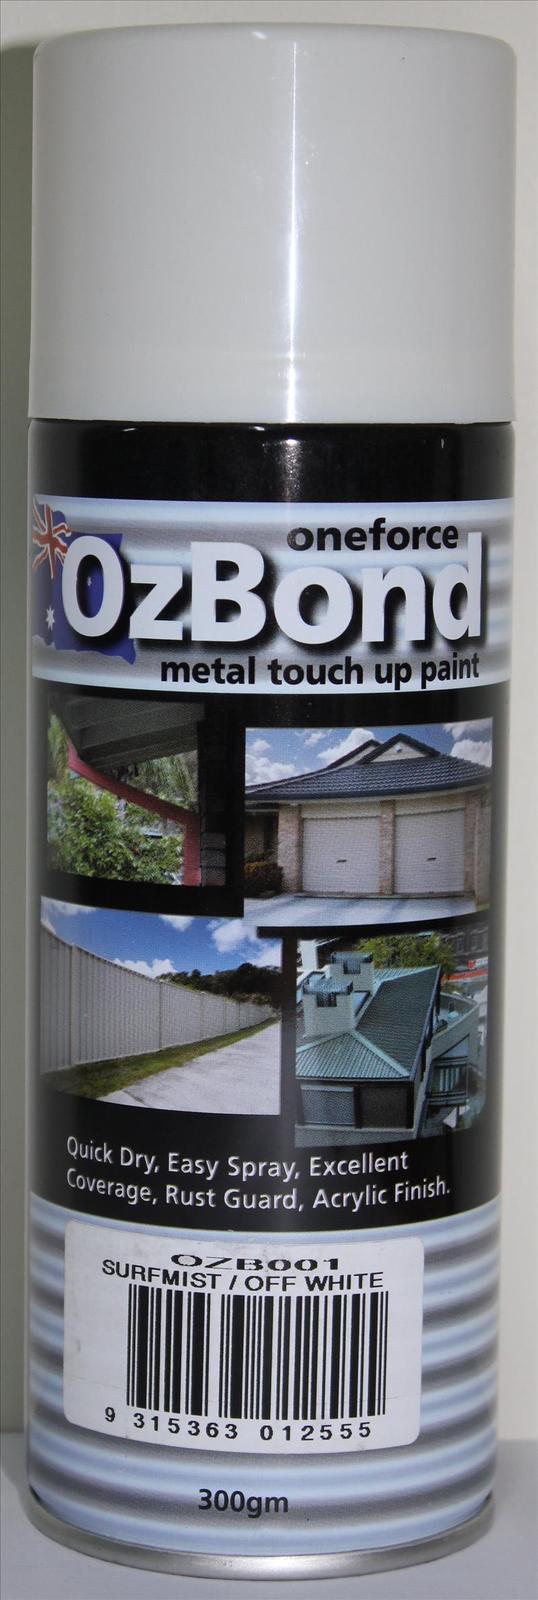 OzBond Surfmist/Off White Acrylic Spray Paint 300g OZB001 - Double Bay Hardware